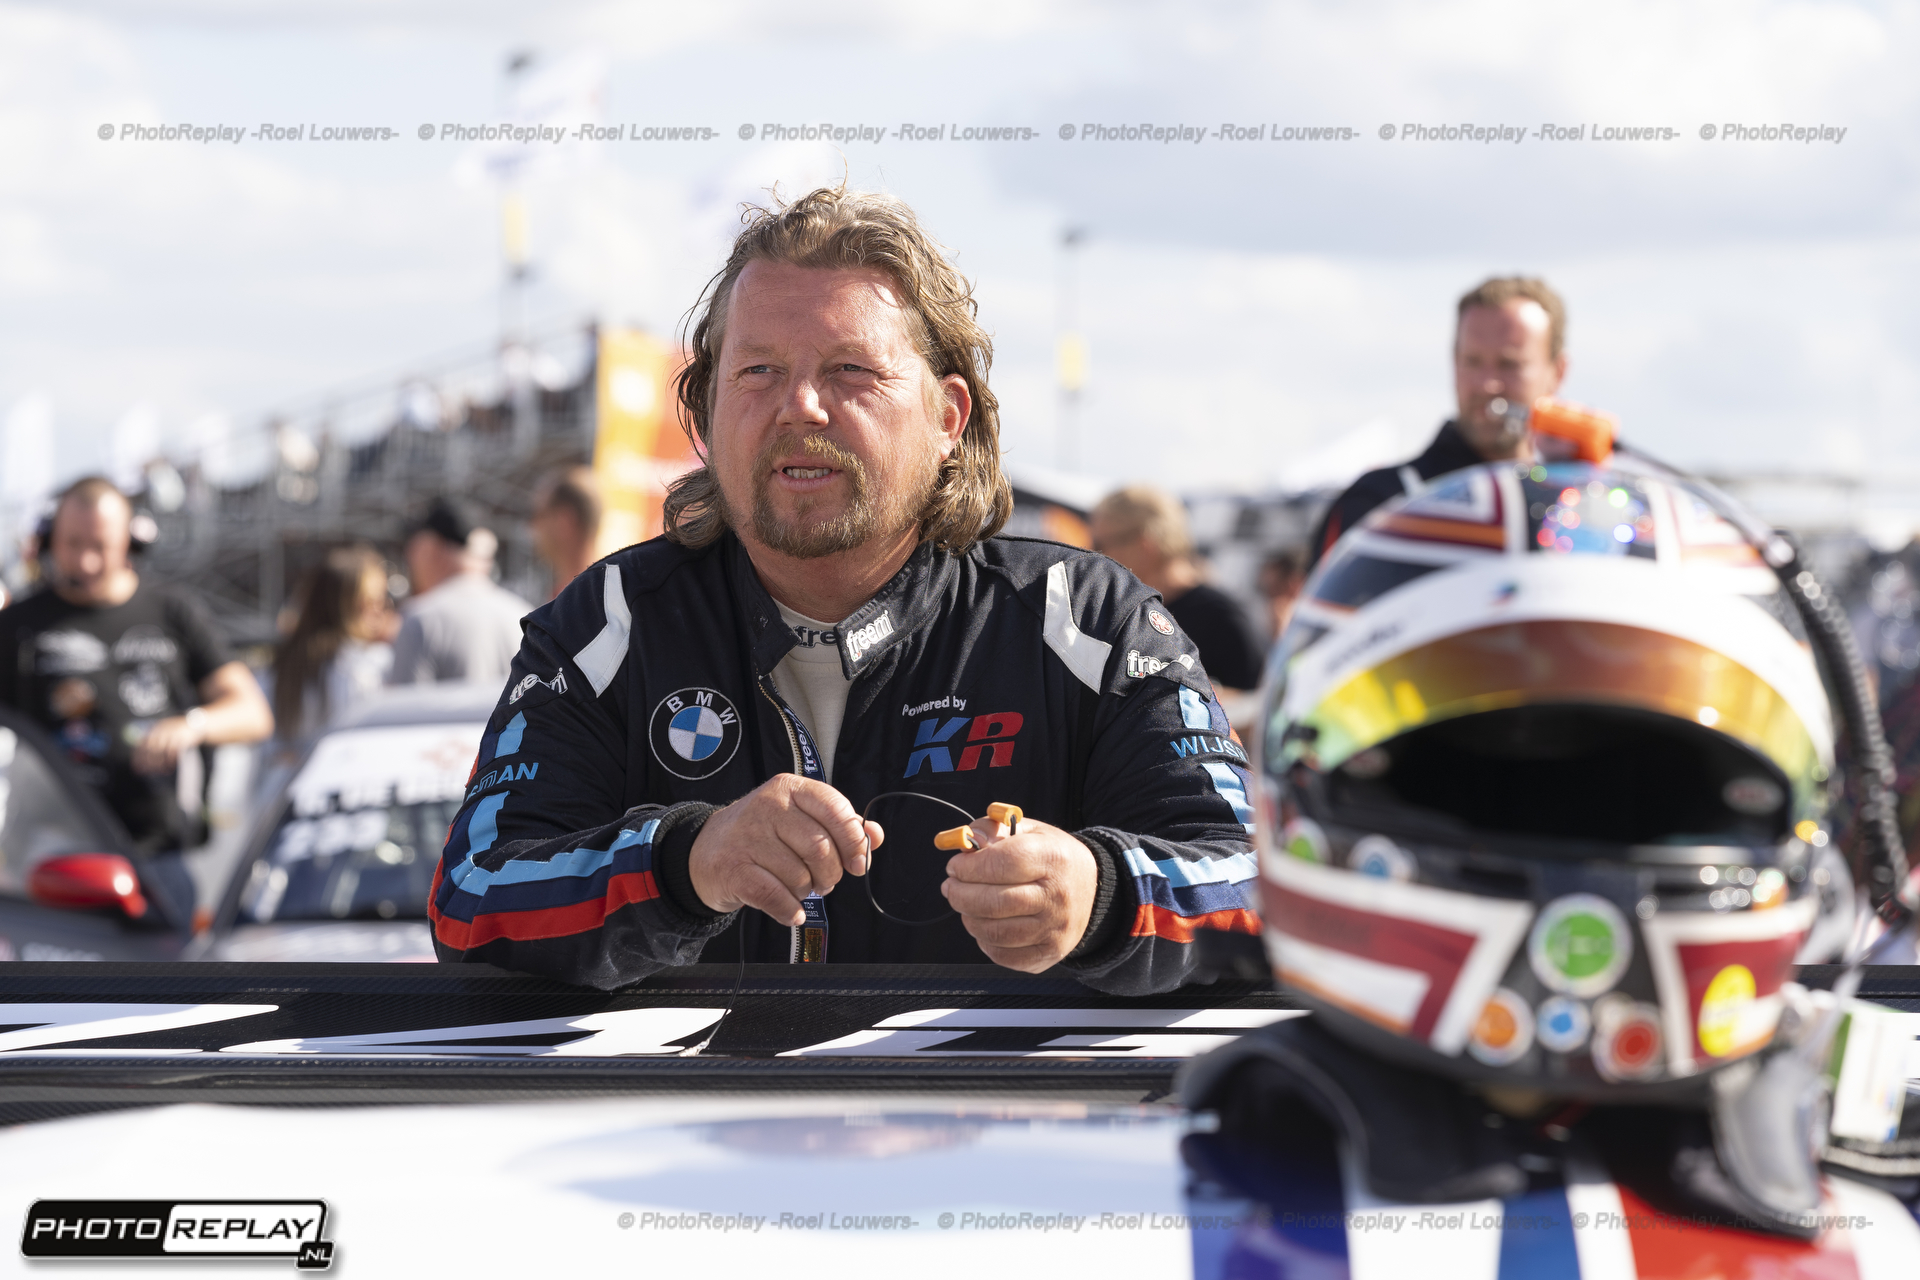 06/08/2022: Jack's Racing Day, TT-Circuit Assen (NL)
Photo: 2022 © Roel Louwers